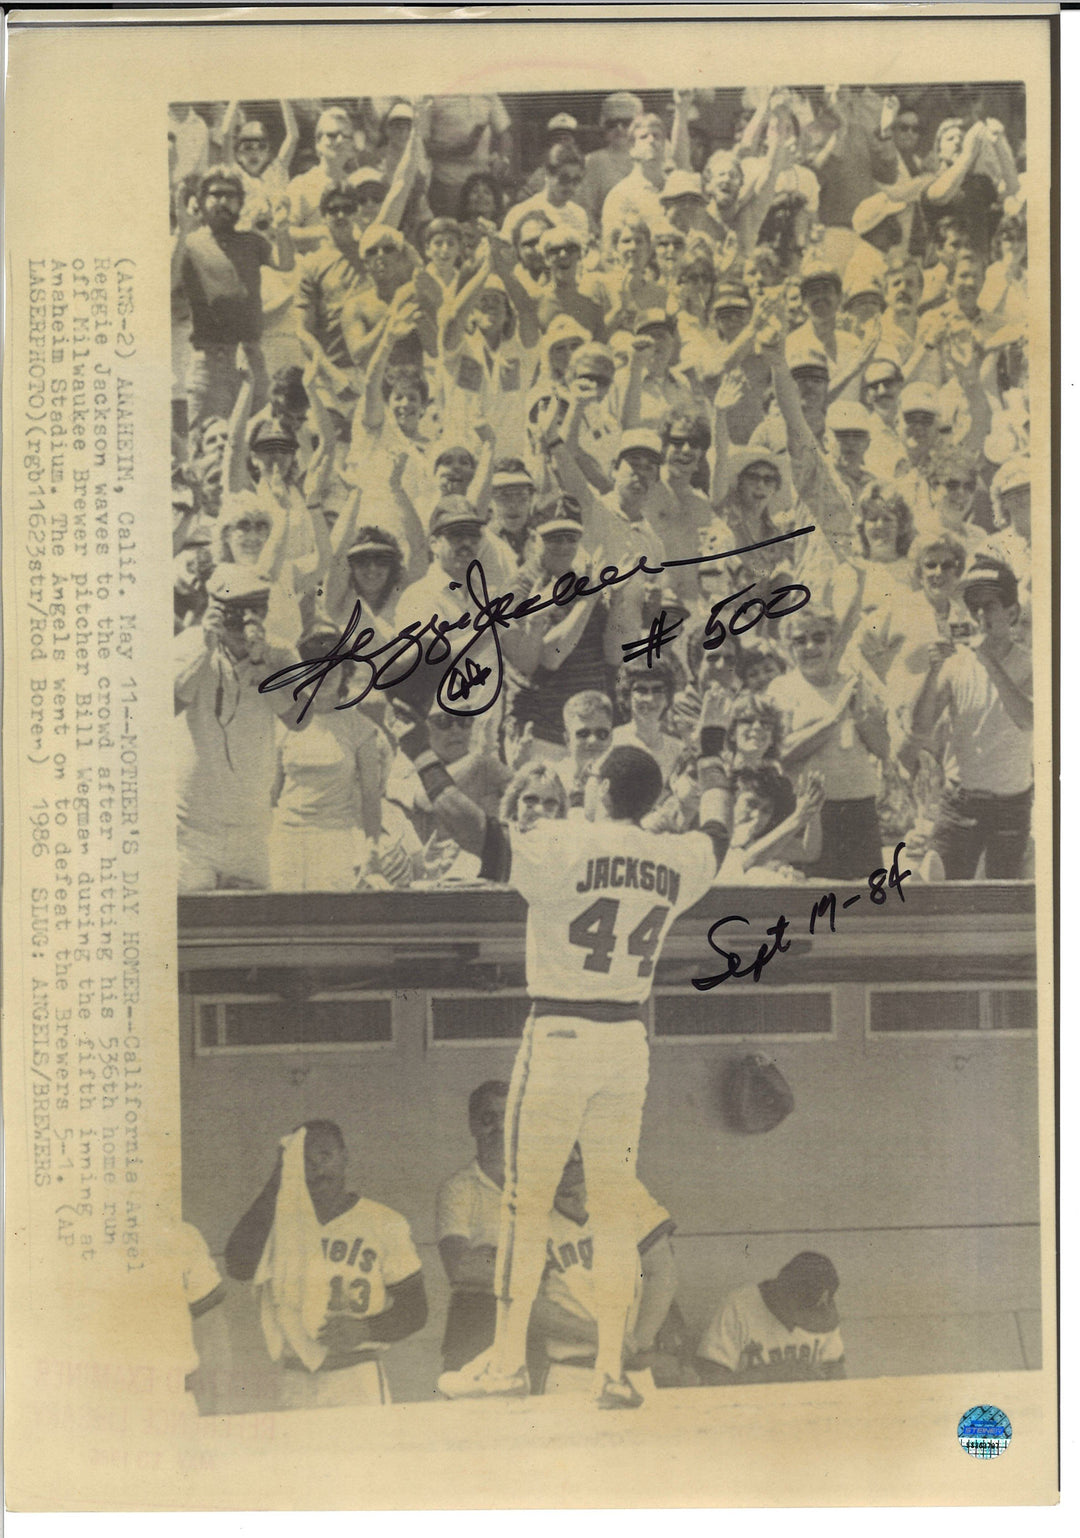 Reggie Jackson Autographed 7x9 Press Photo Copy dated 5/12/86